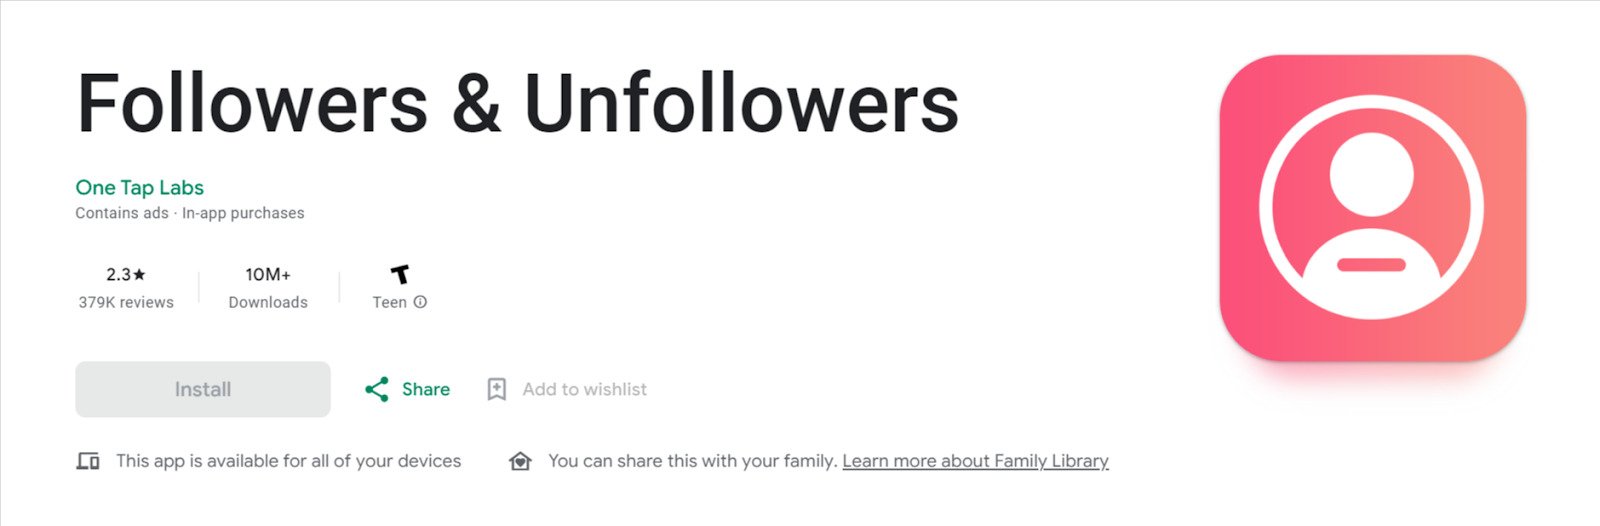 Instagram followers app - followers and unfollowers